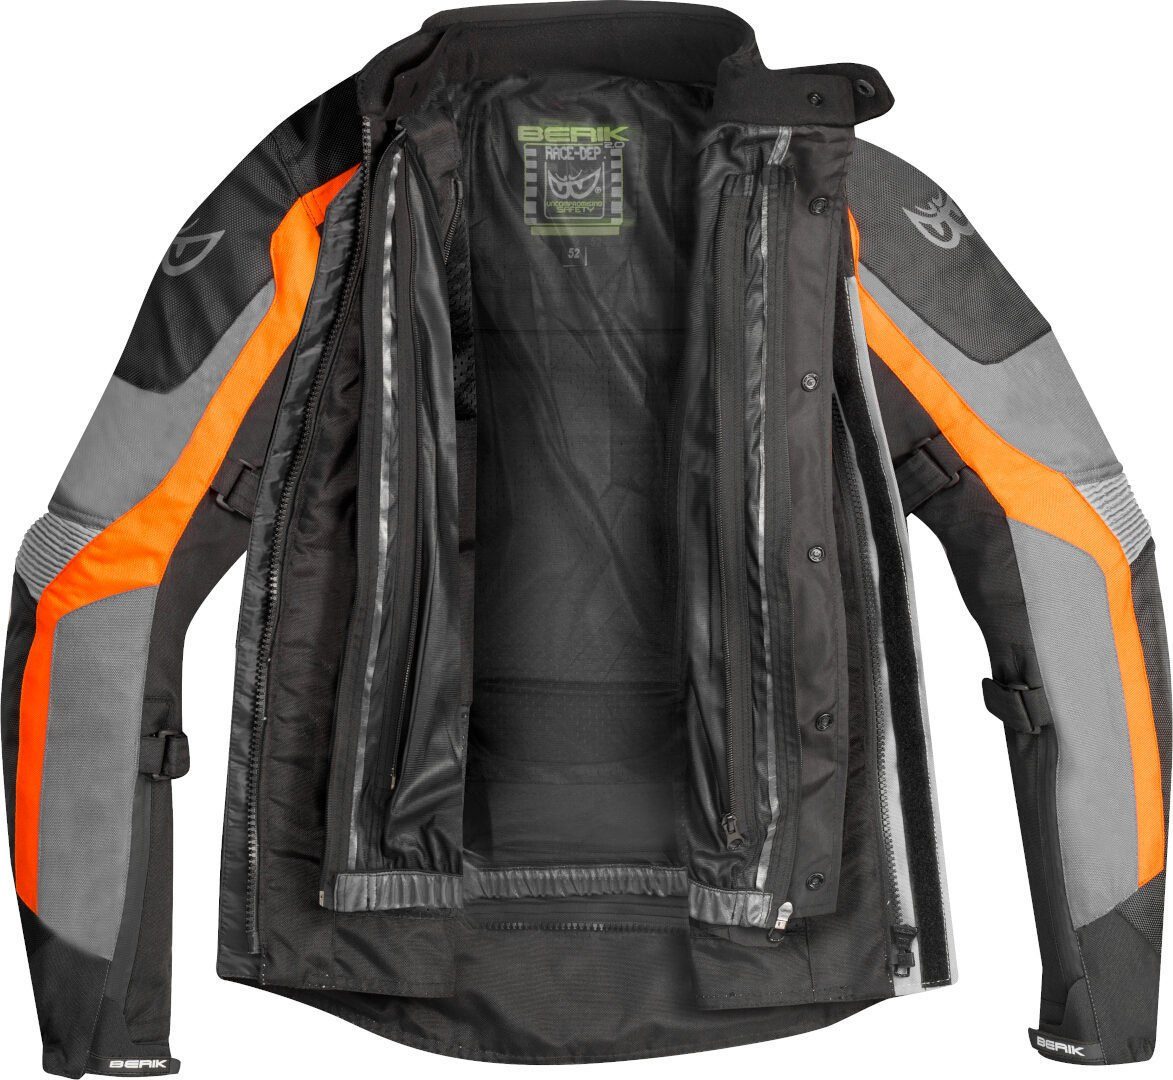 Black/Grey/Orange Motorradjacke Berik Motorrad Safari wasserdichte 3in1 Textiljacke